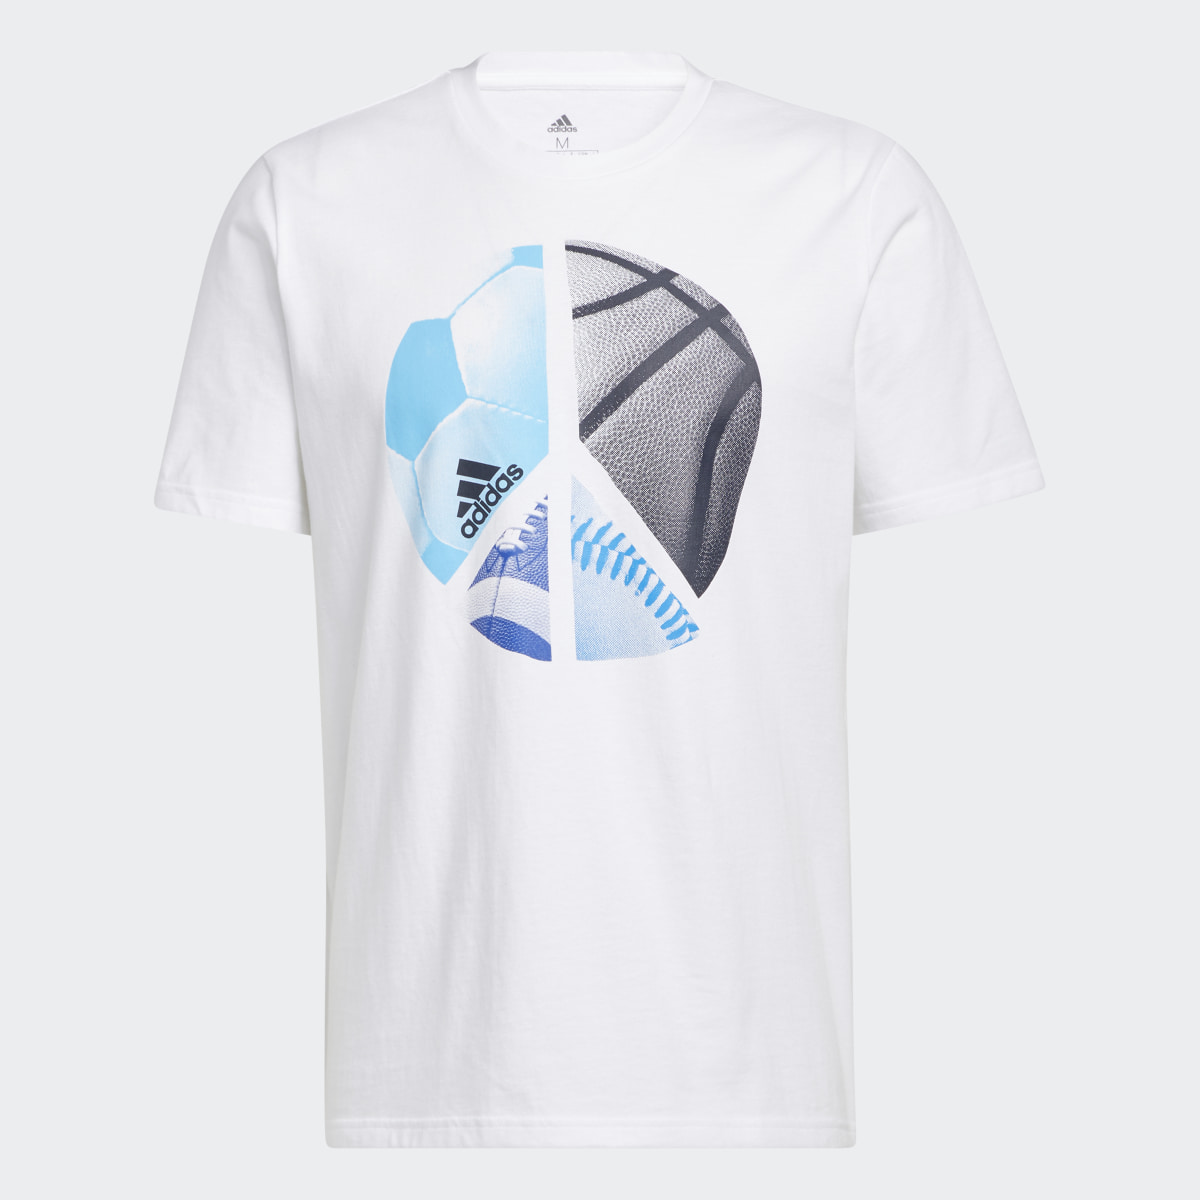 Adidas T-shirt Multiplicity Graphic. 5